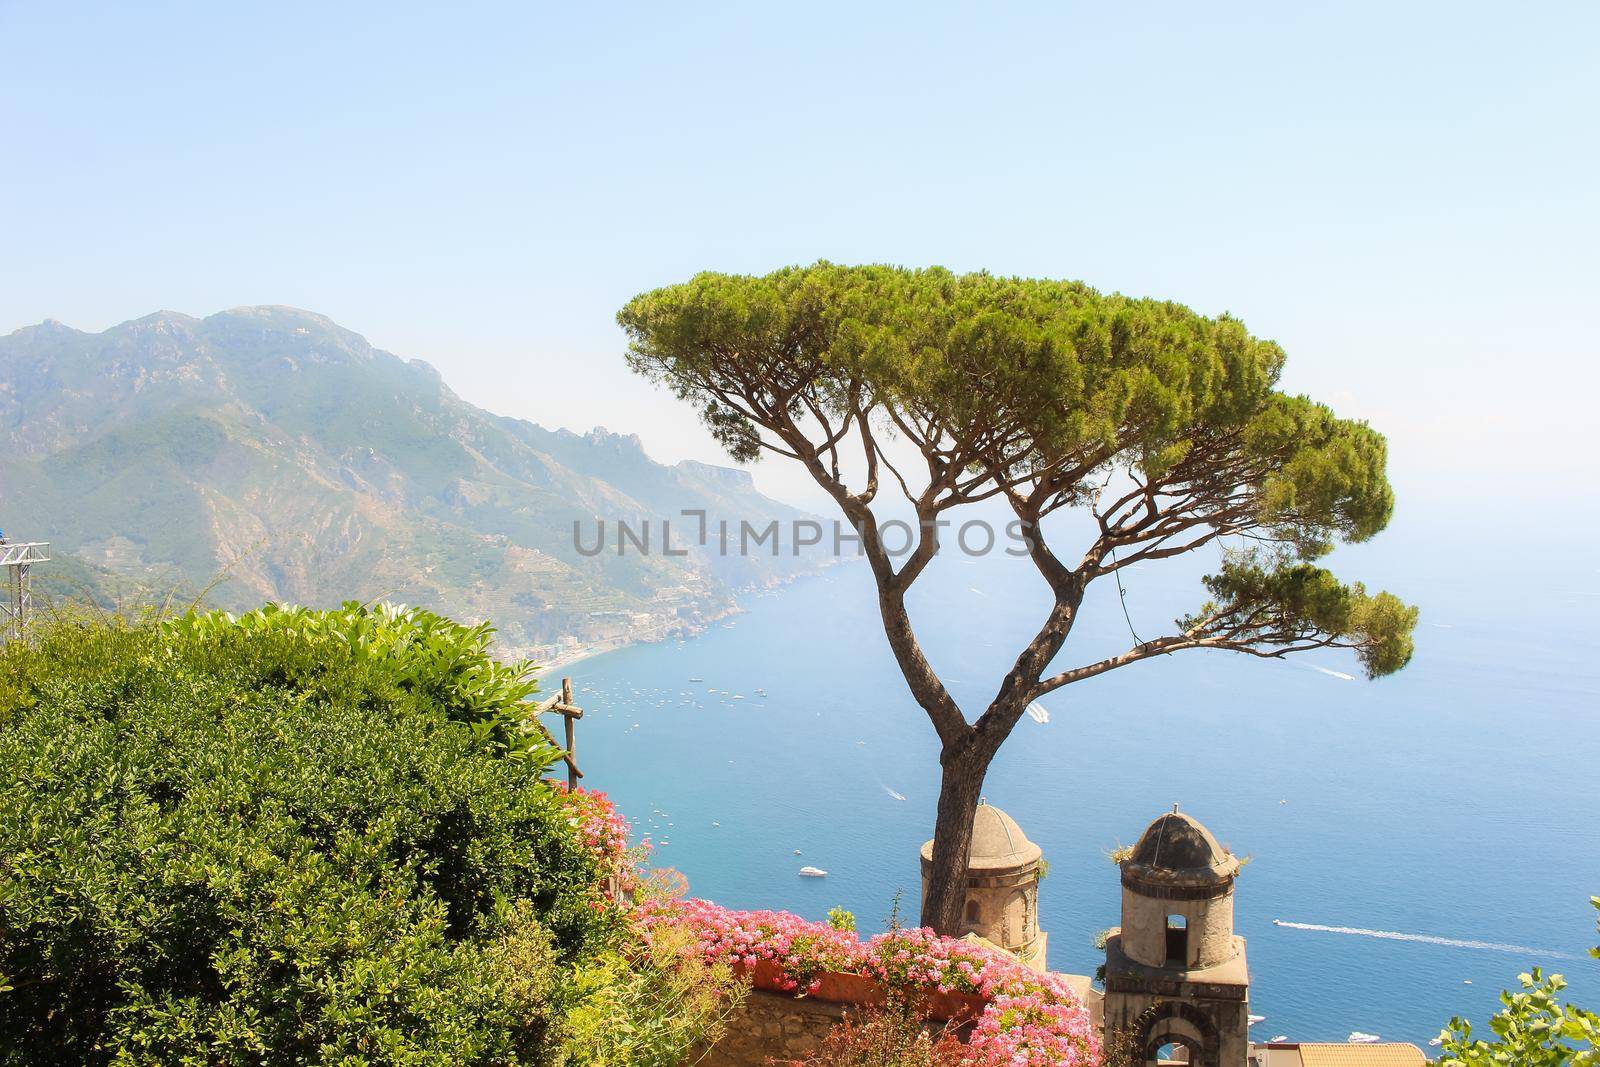 Italian tree in a garden in Ravello, overlooking the scenic Amalfi landscape & coastline, Italy. by olifrenchphoto